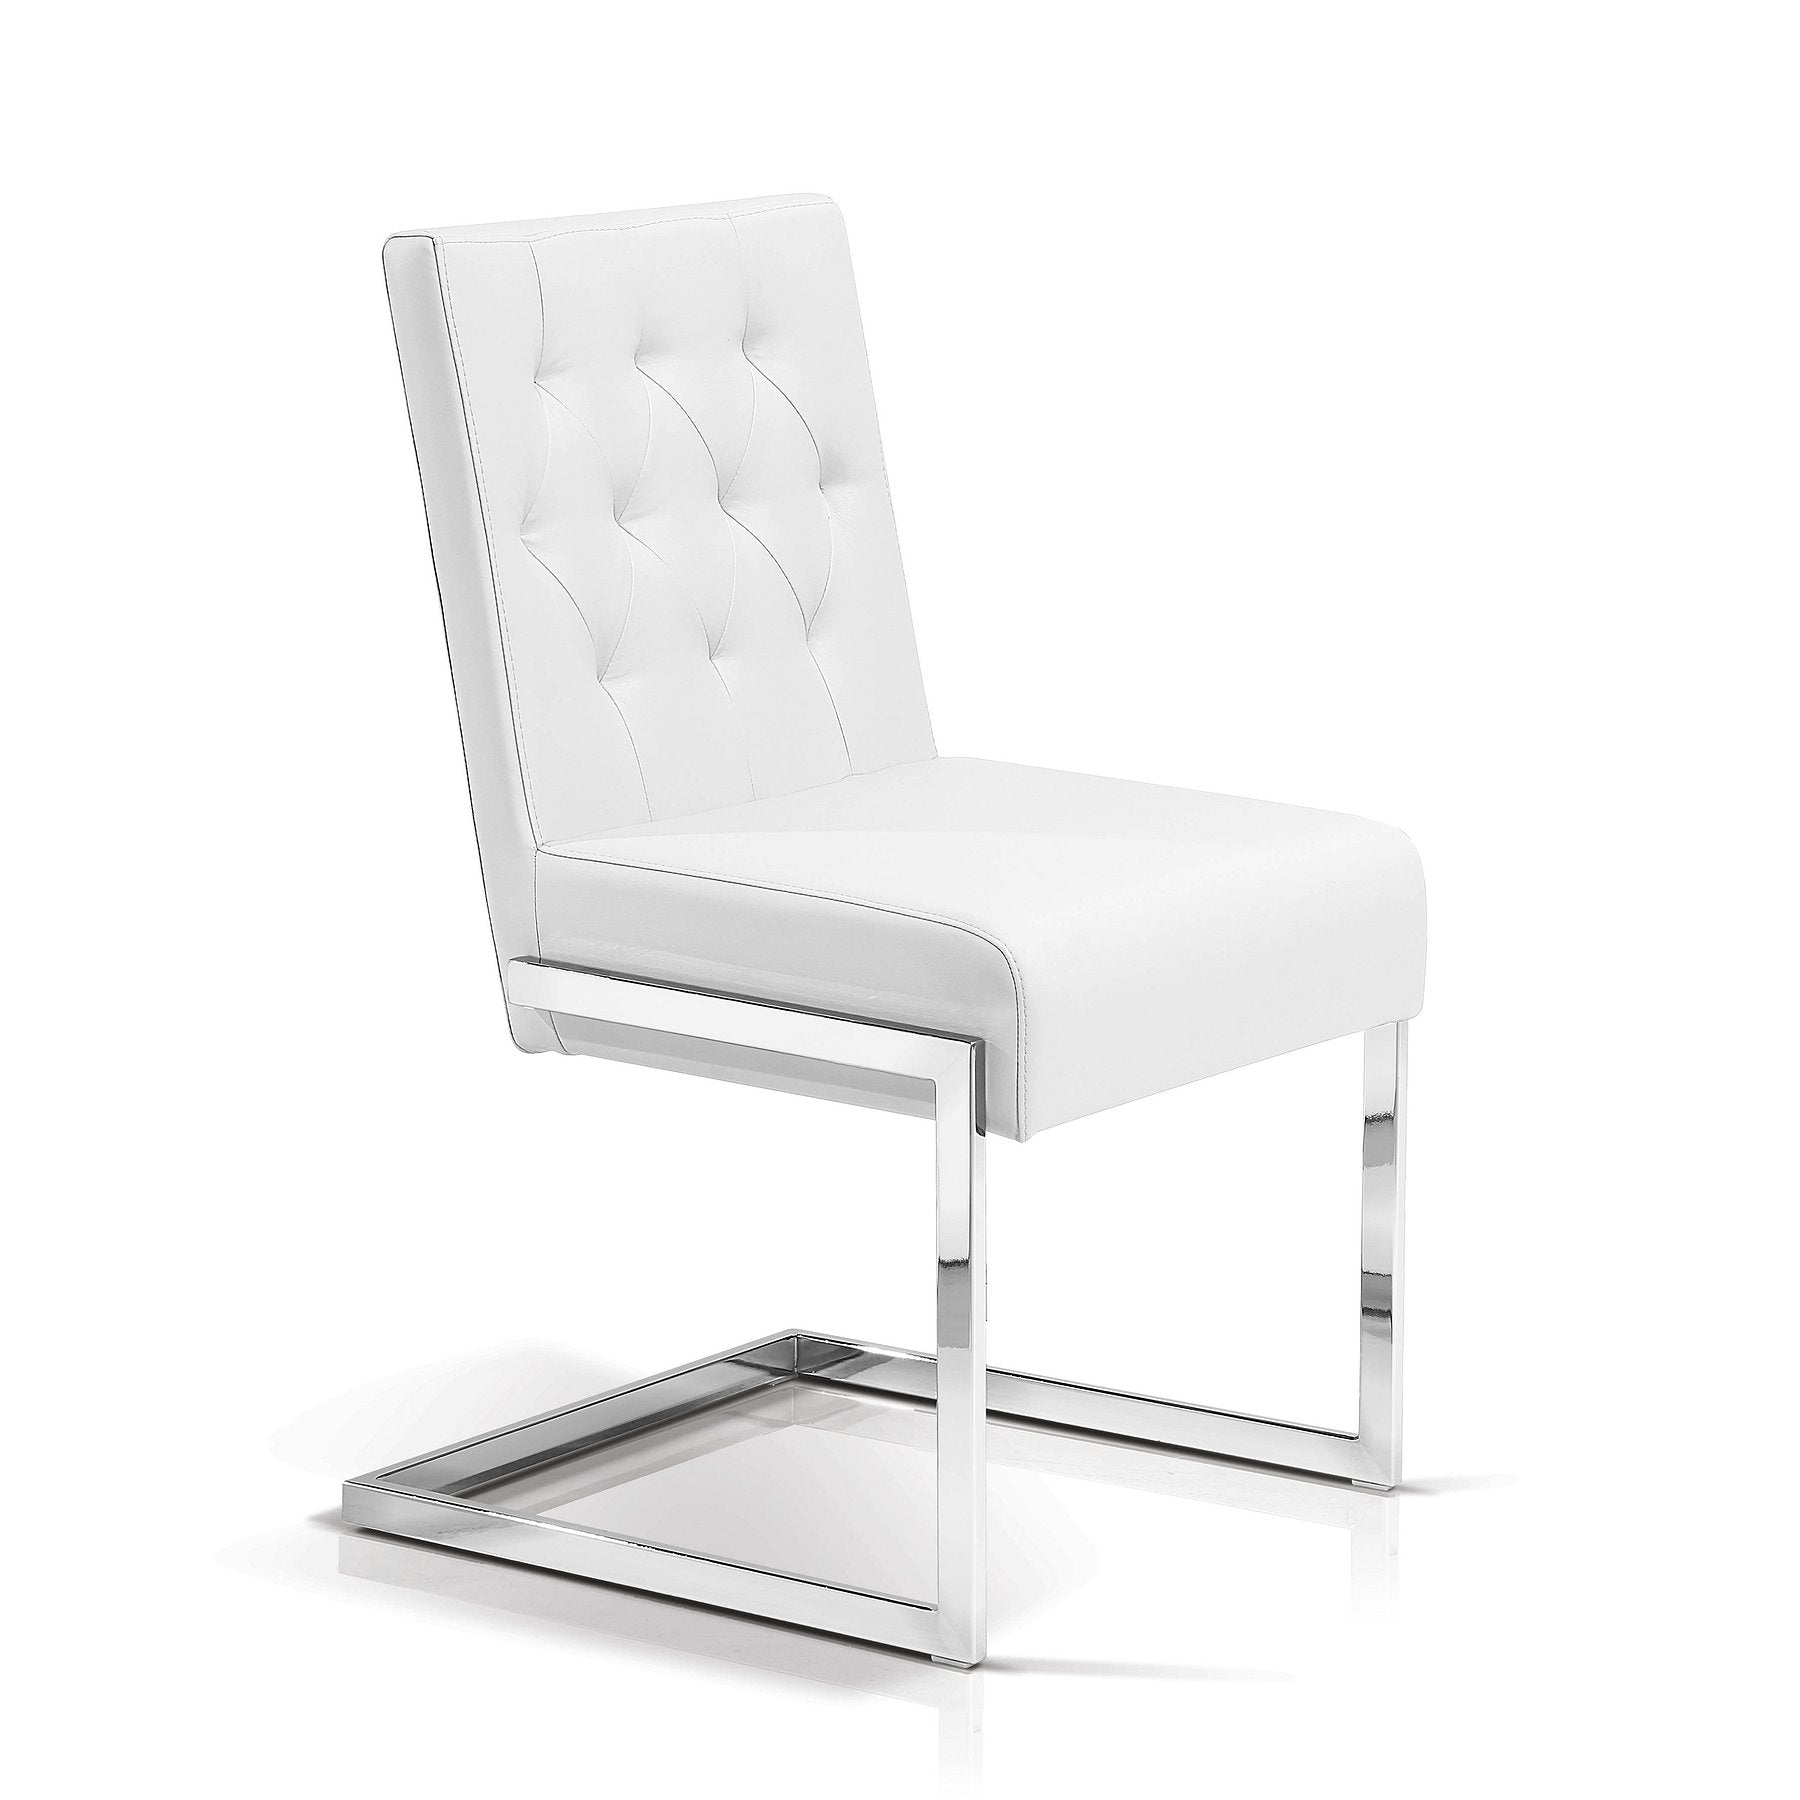 SEF413126 garbo - dining chair - Dreamart Gallery